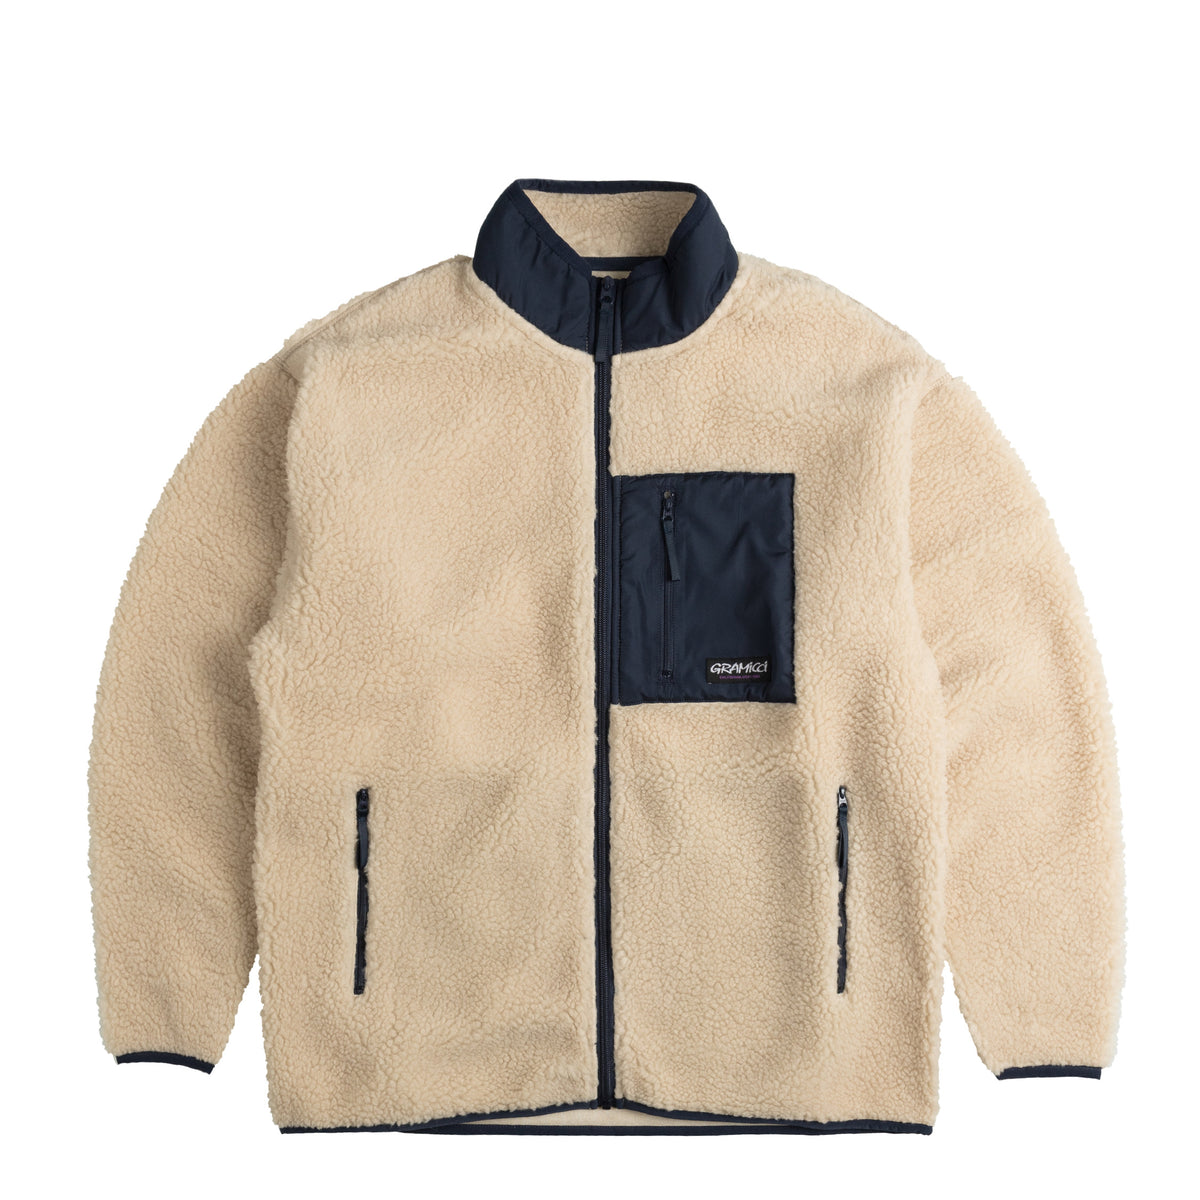 Gramicci Sherpa Jacket » Buy online now!